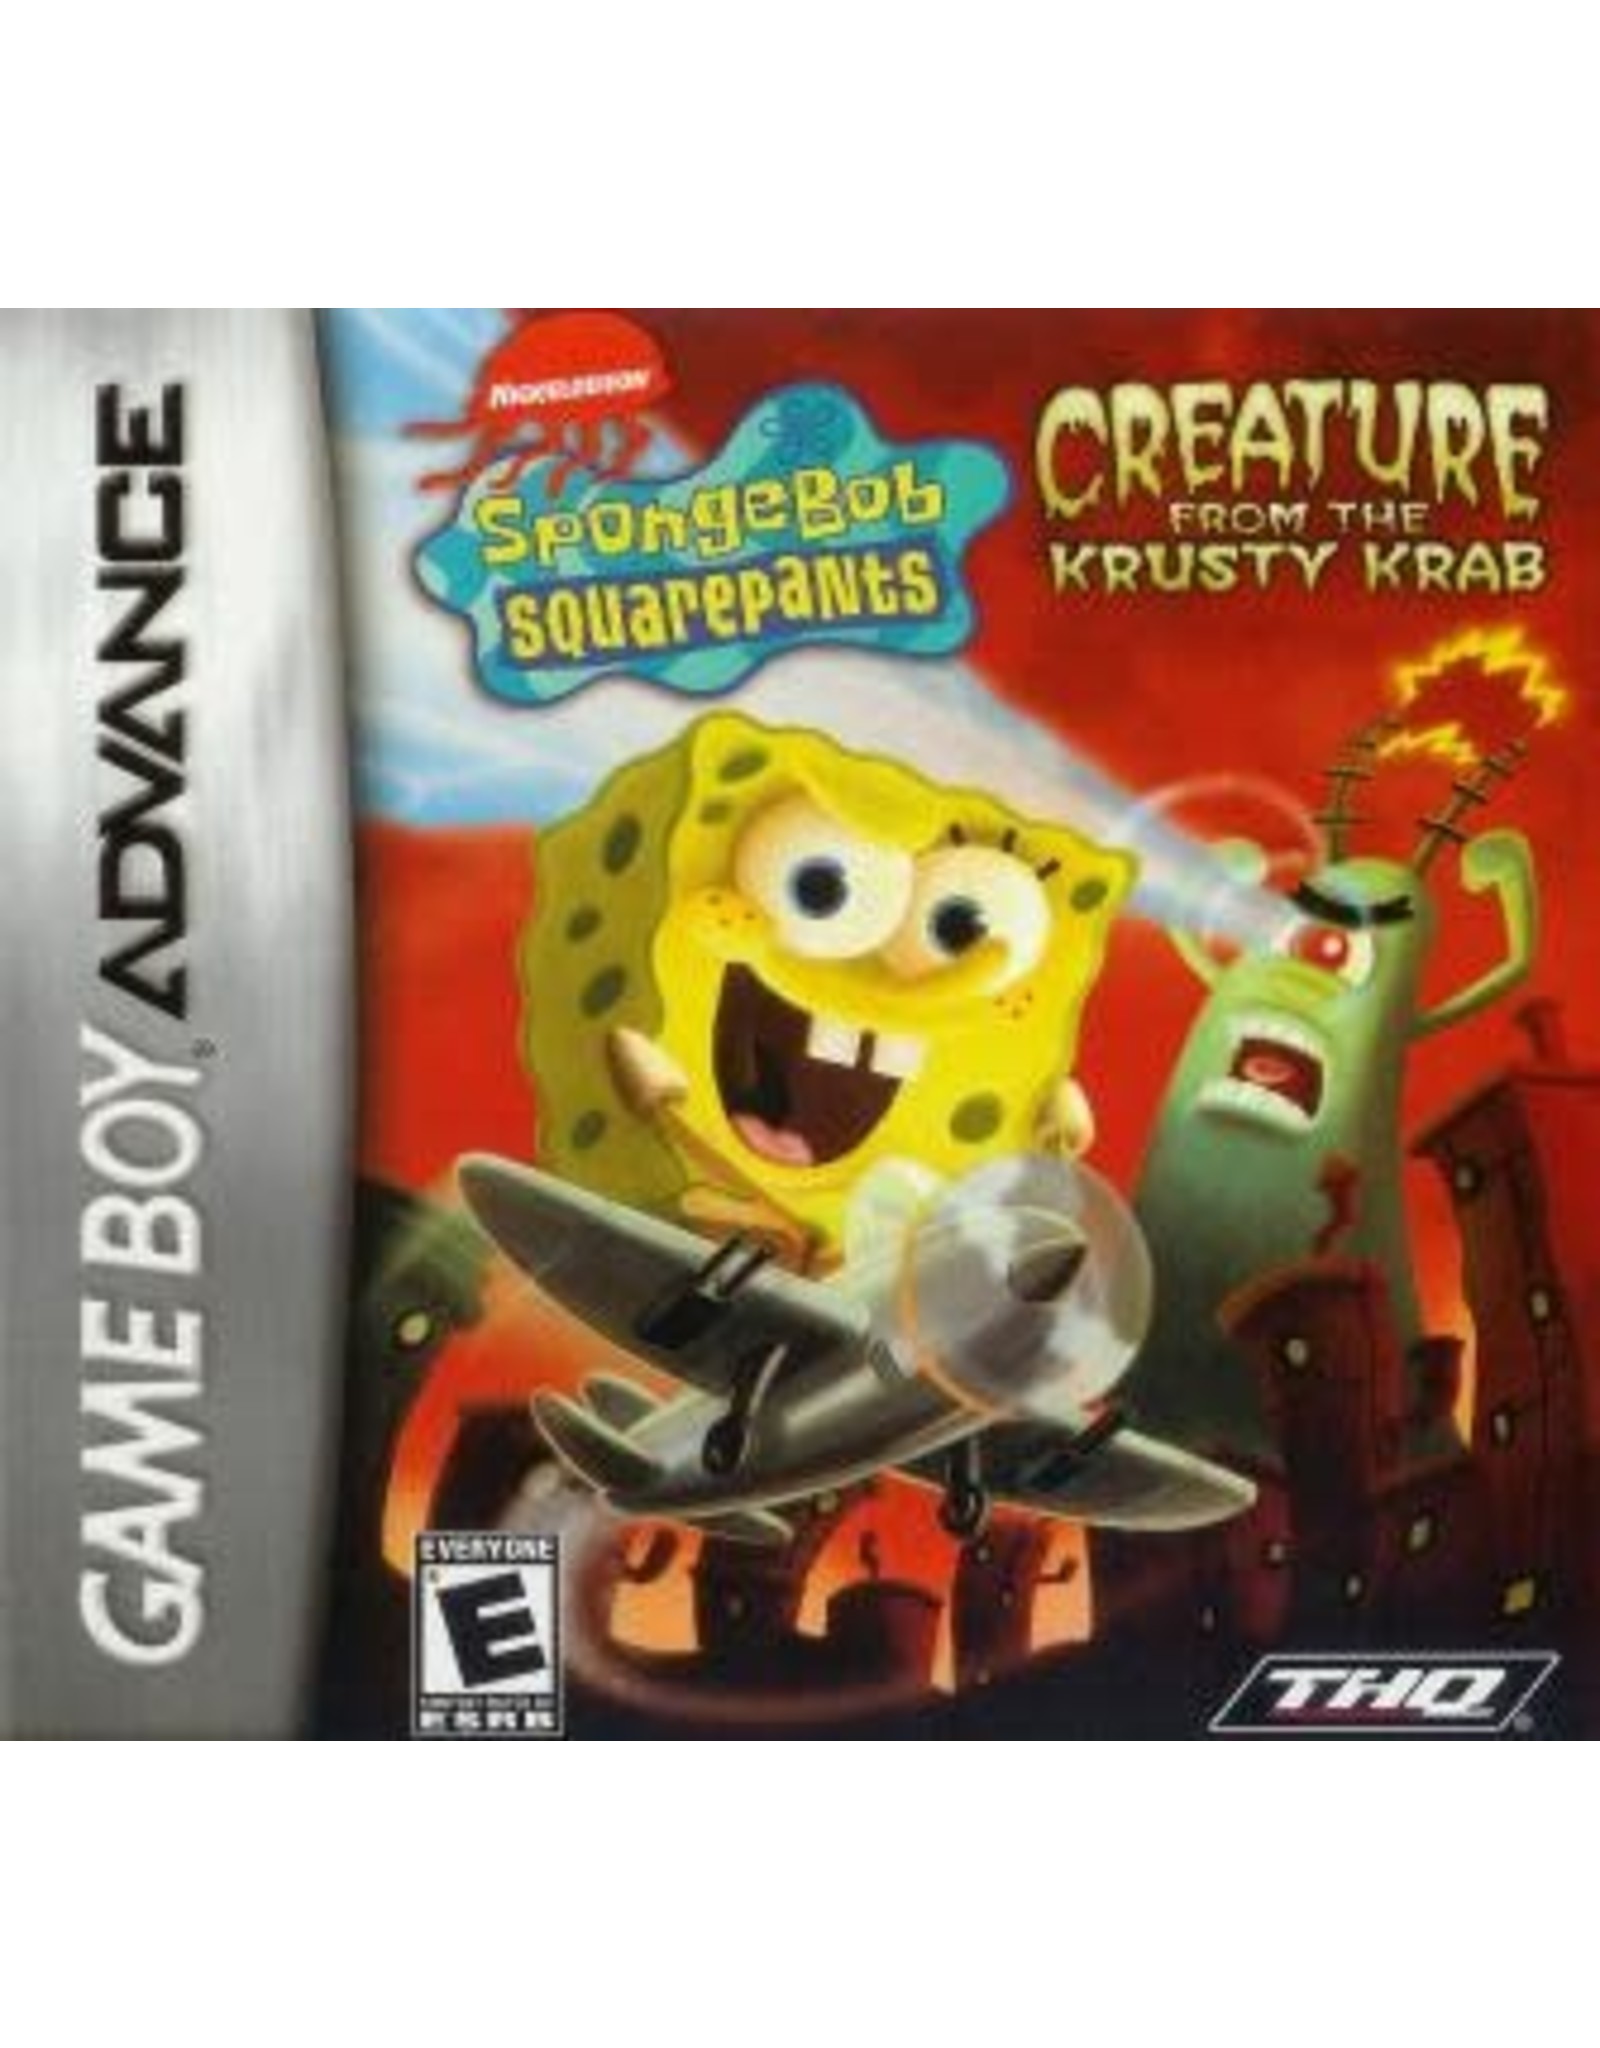 Game Boy Advance SpongeBob SquarePants Creature from Krusty Krab (Cart Only)